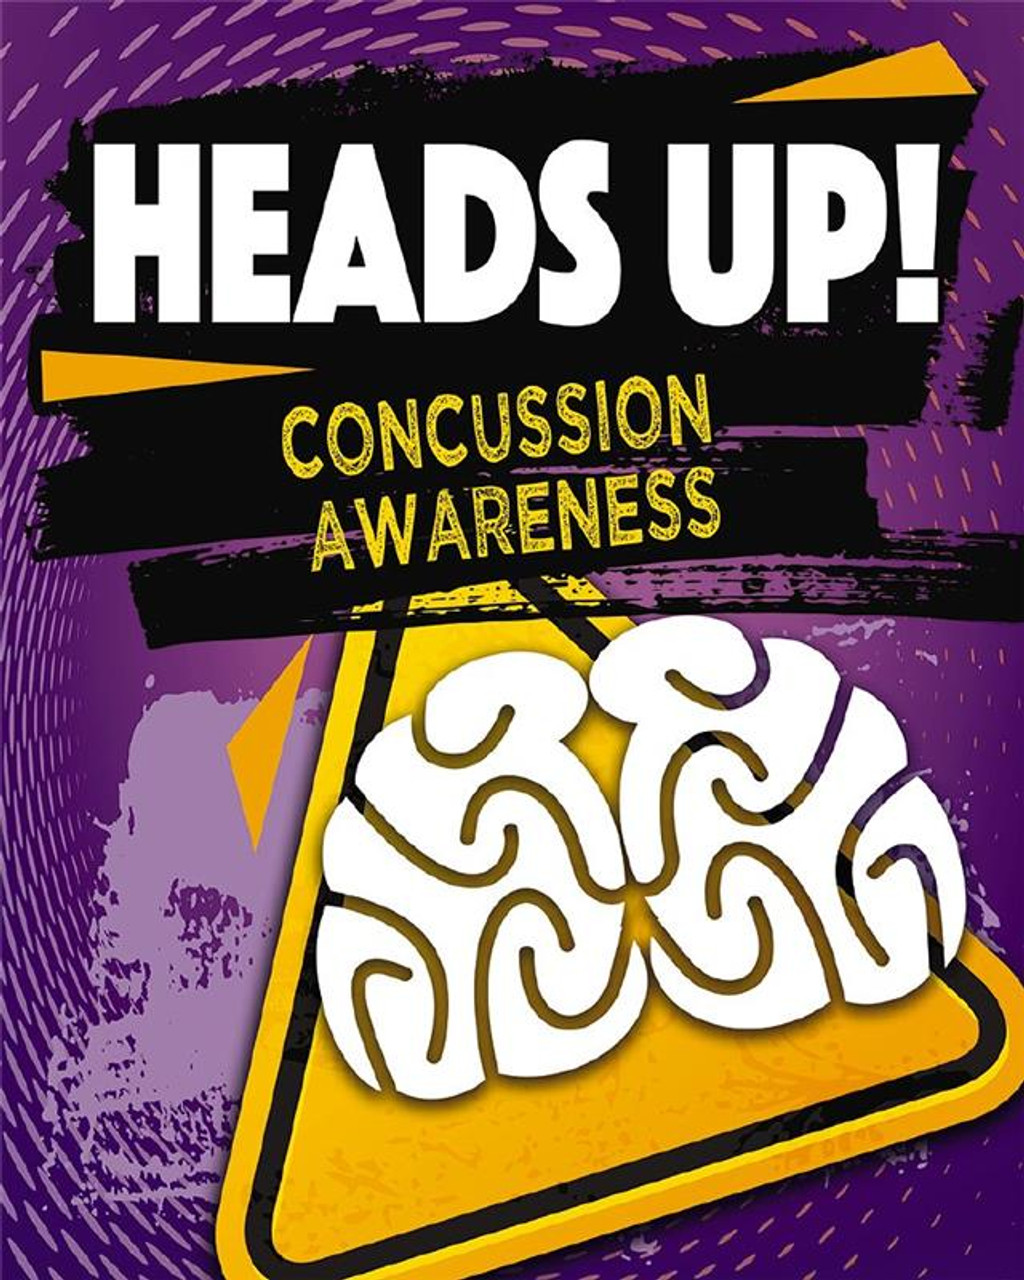 Head's Up - Concussion Awareness by Jeff Szpirglas